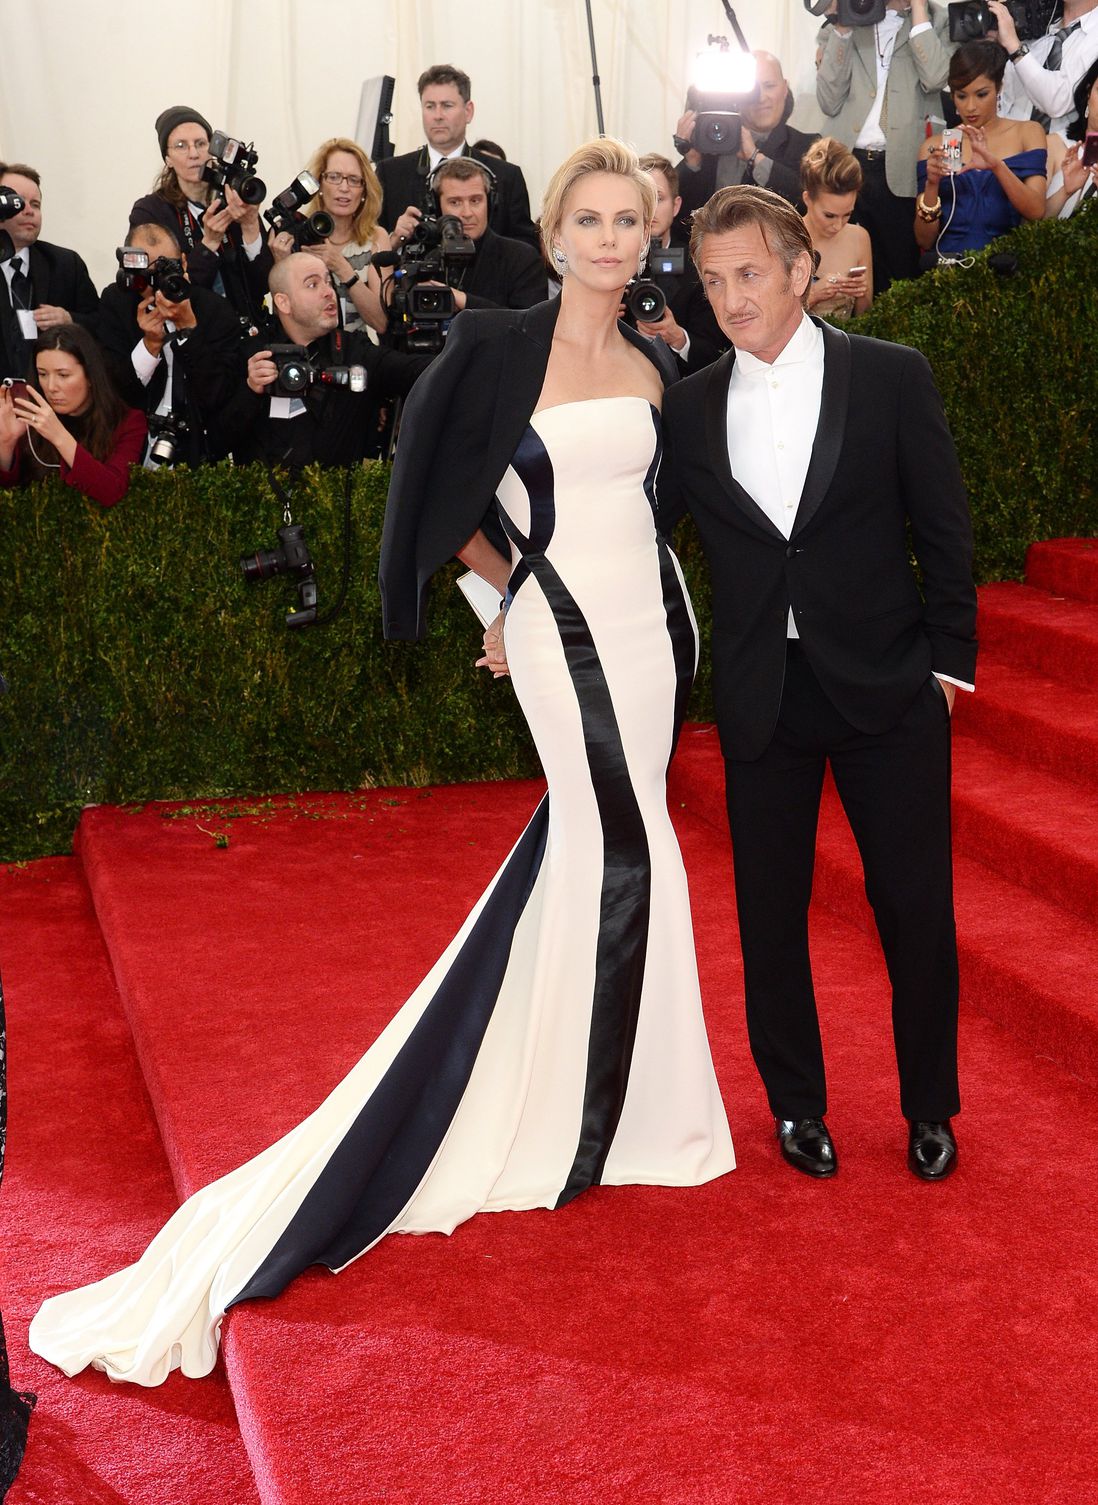 Charlize Theron and Sean Penn